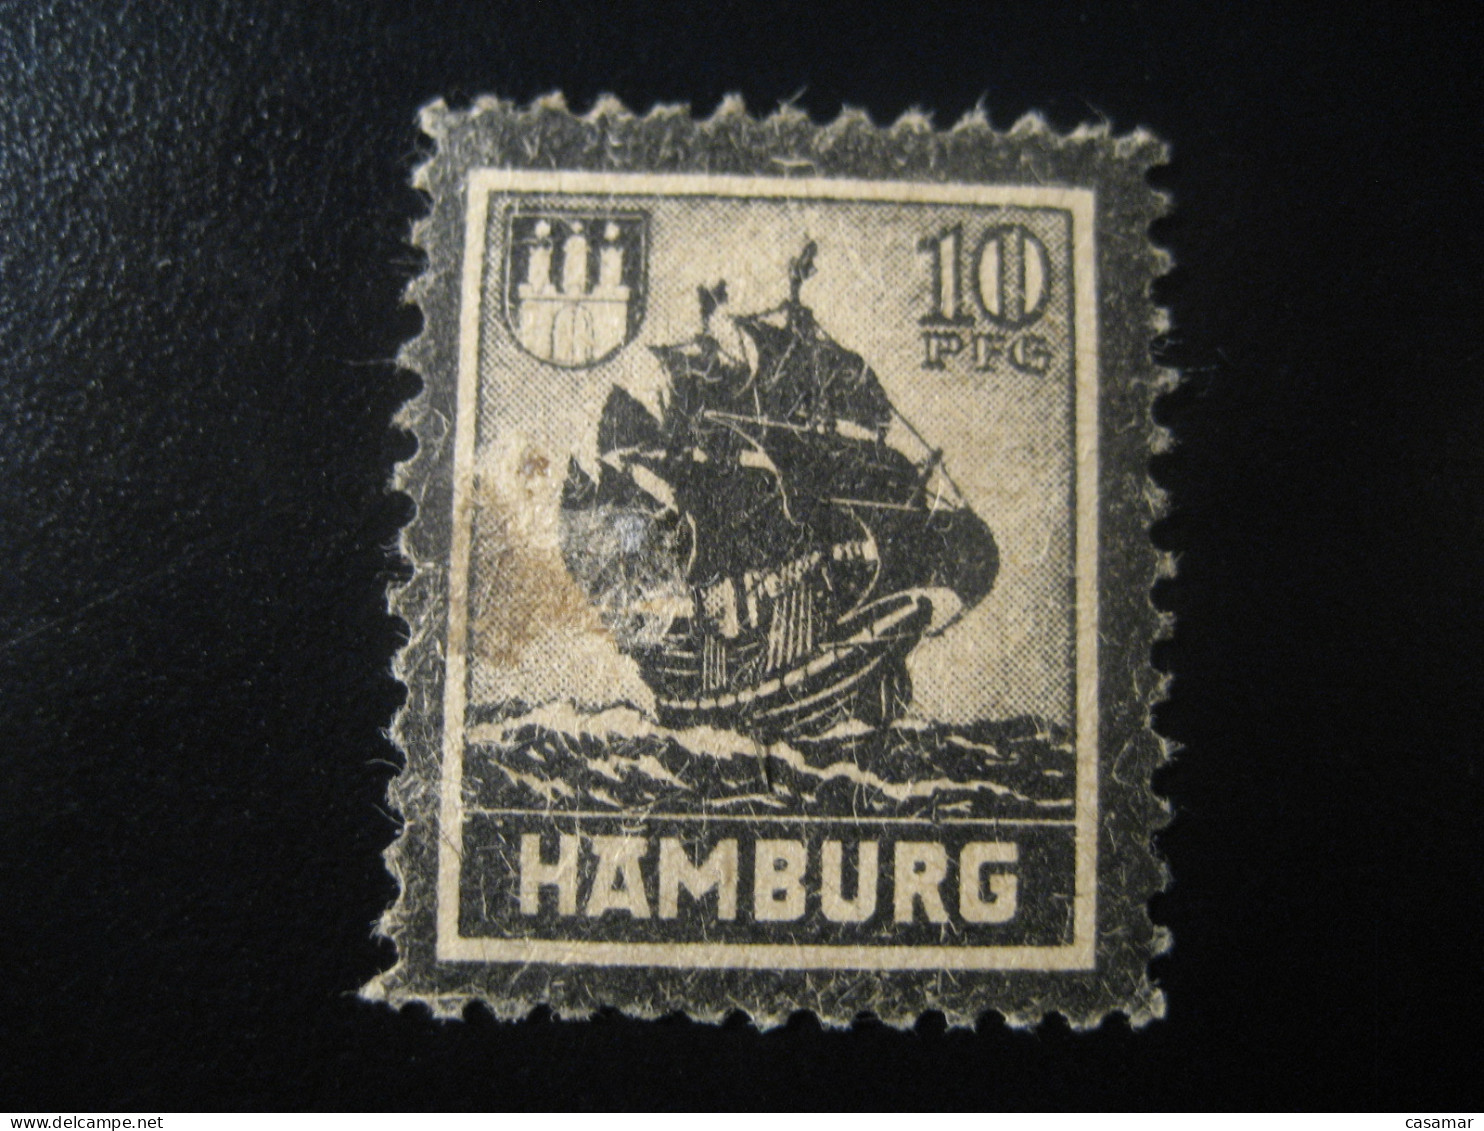 HAMBURG 10 Pfg Ship Caravel Local Fiscal Stamp Tax Service Revenue GERMANY - Hamburg